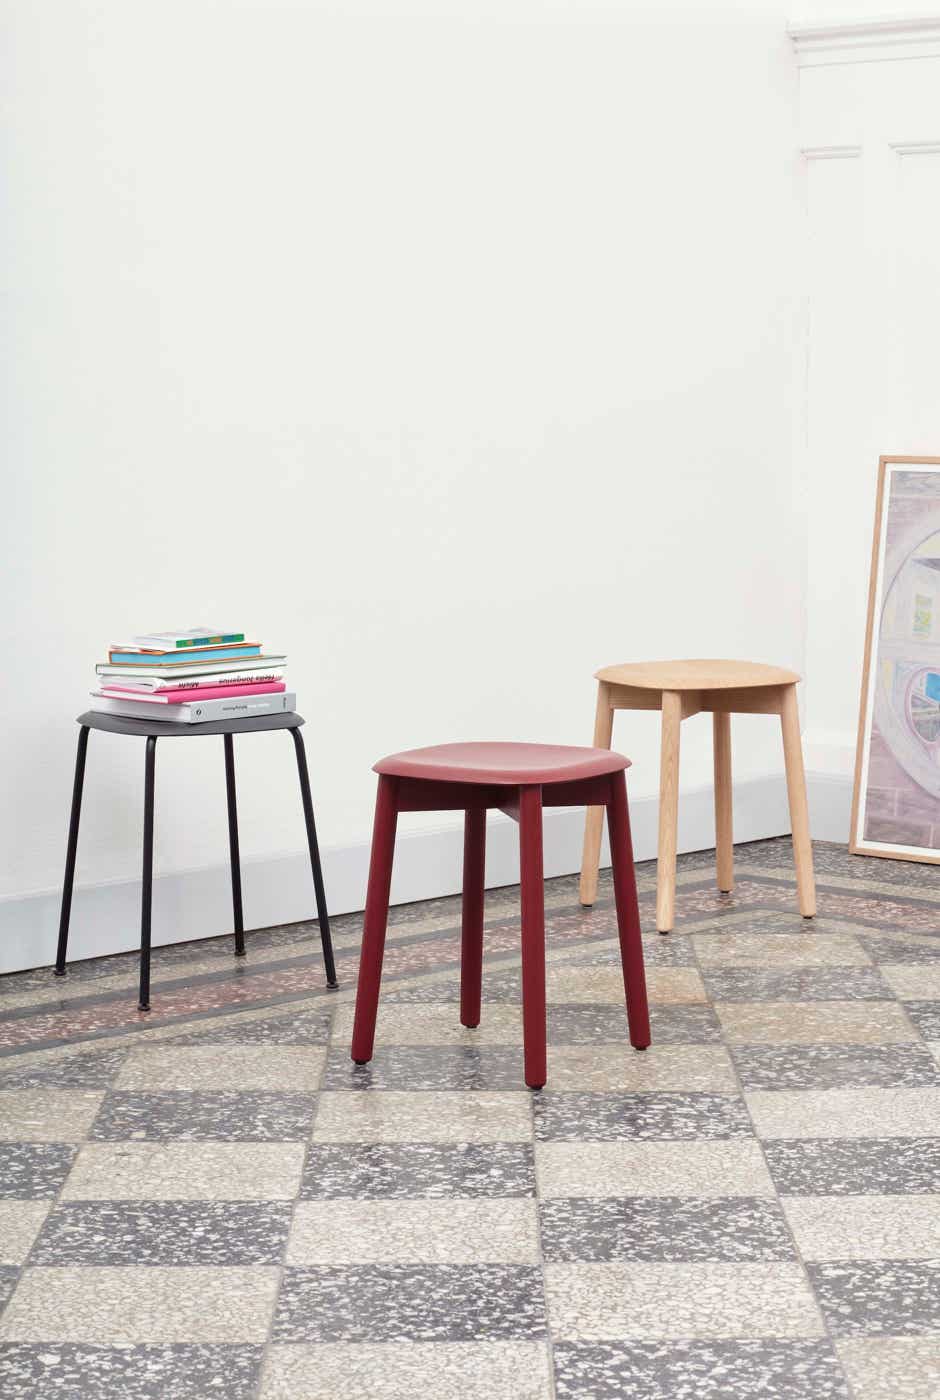 Soft Edge stools  Iskos-Berlin, 2016 / 2020